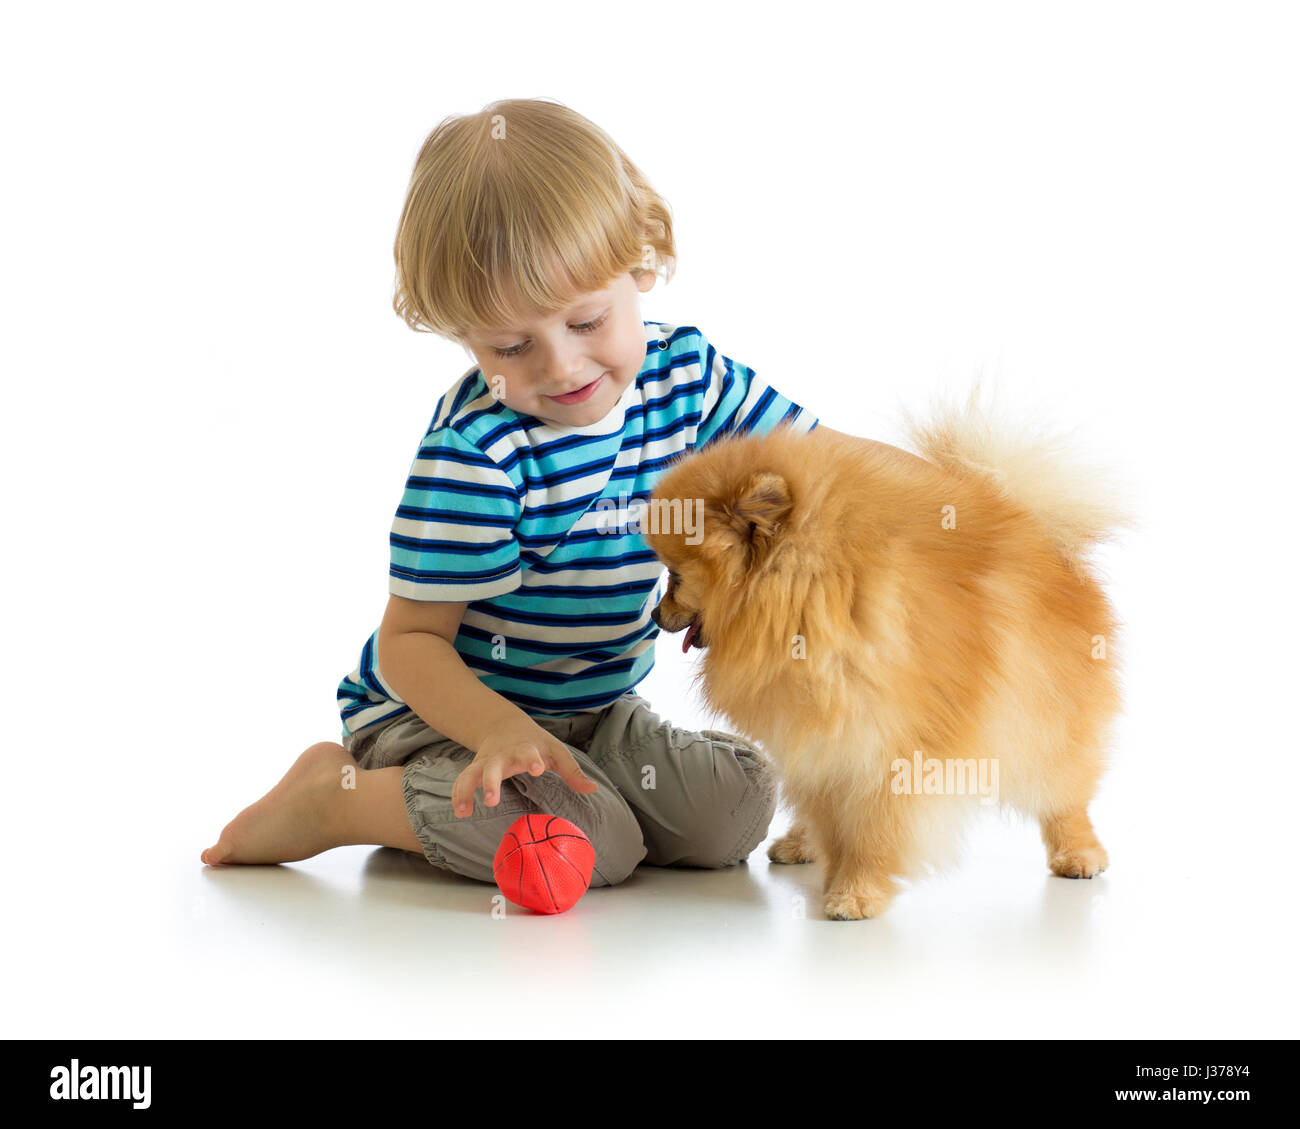 Little boy playing with dog spitz, isolated on white background Stock Photo